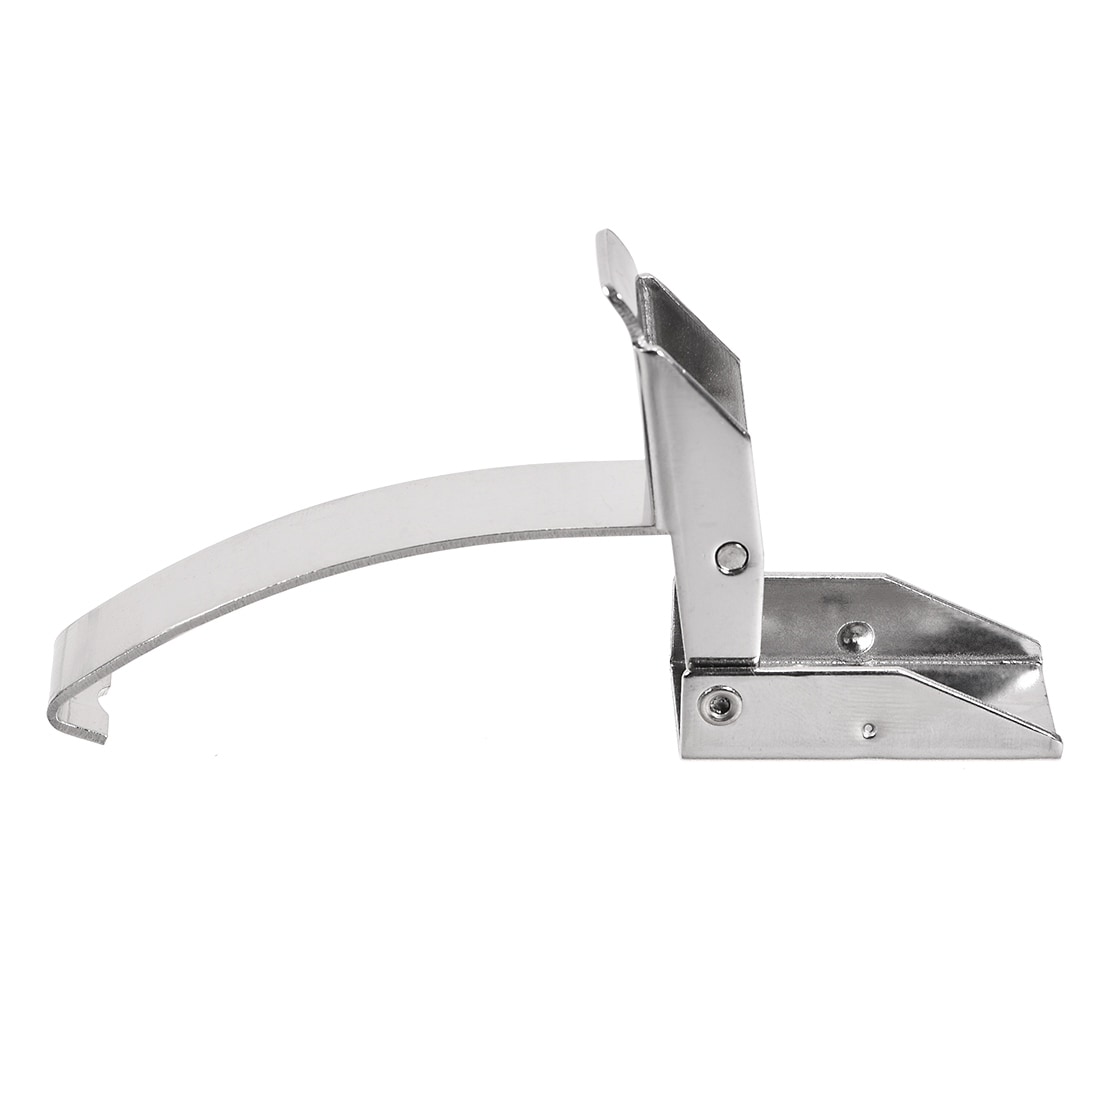 1.6Stainless Steel Cabinet Latch Lock Catch Eye Cabin Hook Plate,2pcs - Silver - Length: 1.6